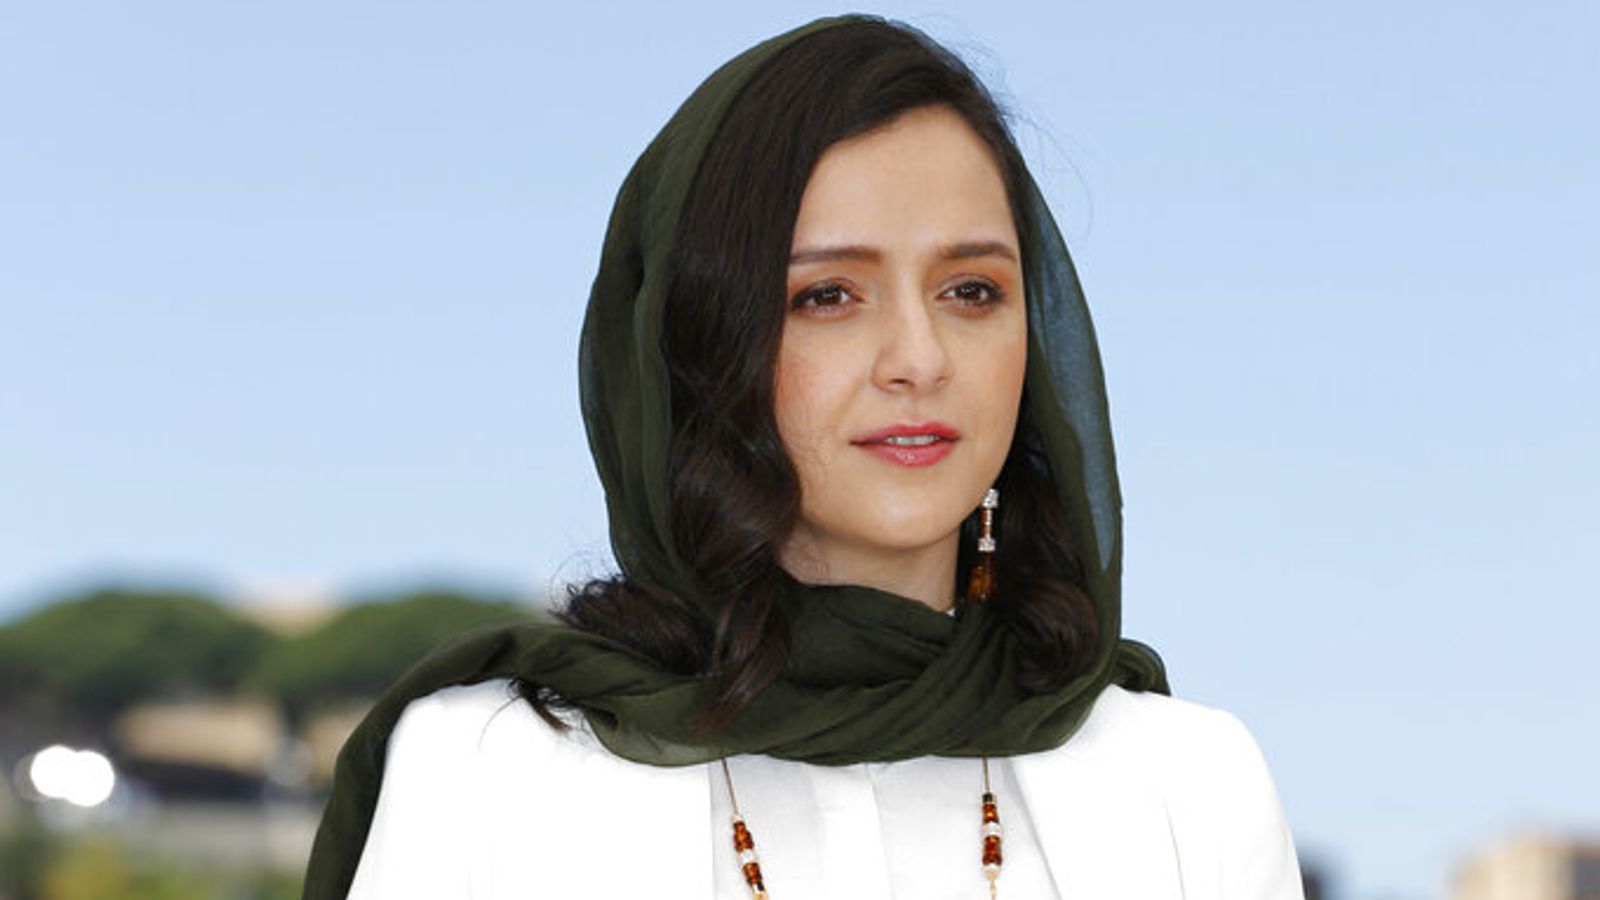 Actress in Oscar-winning Iranian film arrested for 'spreading falsehoods'